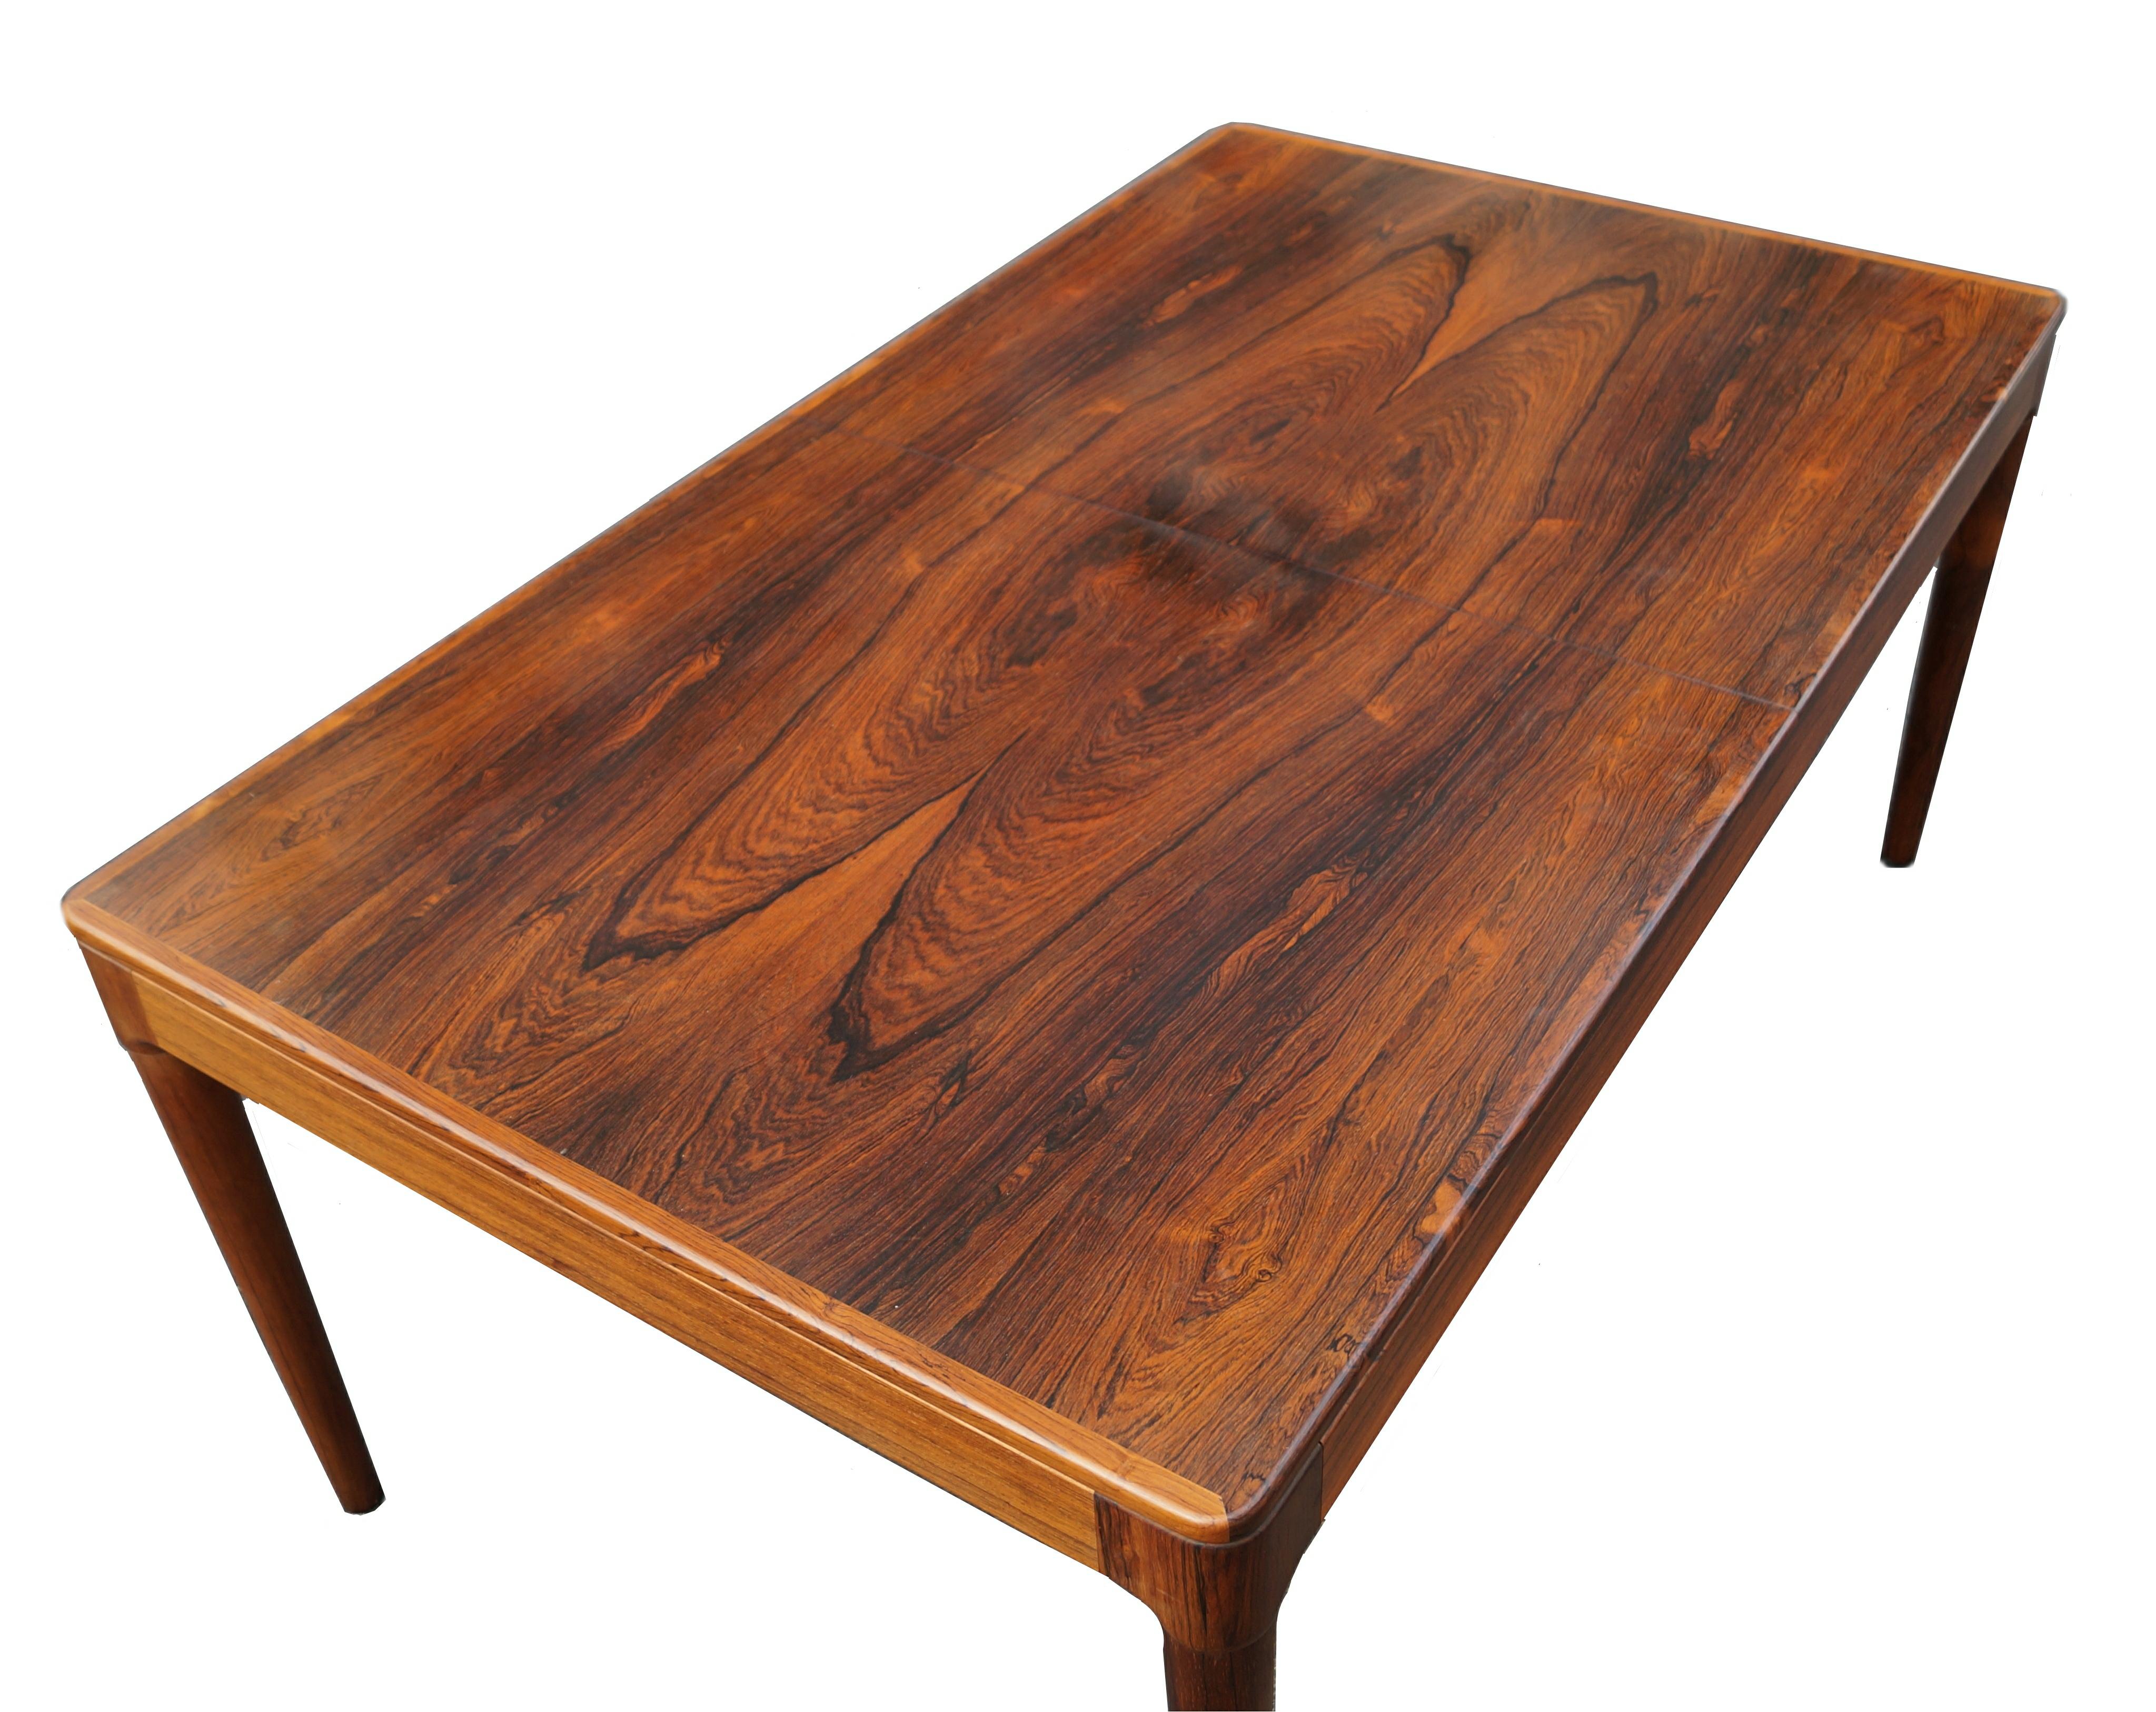 Arne Hovmand-Olsen Mogens Kold rosewood Danish extension table dining table. This measures 67